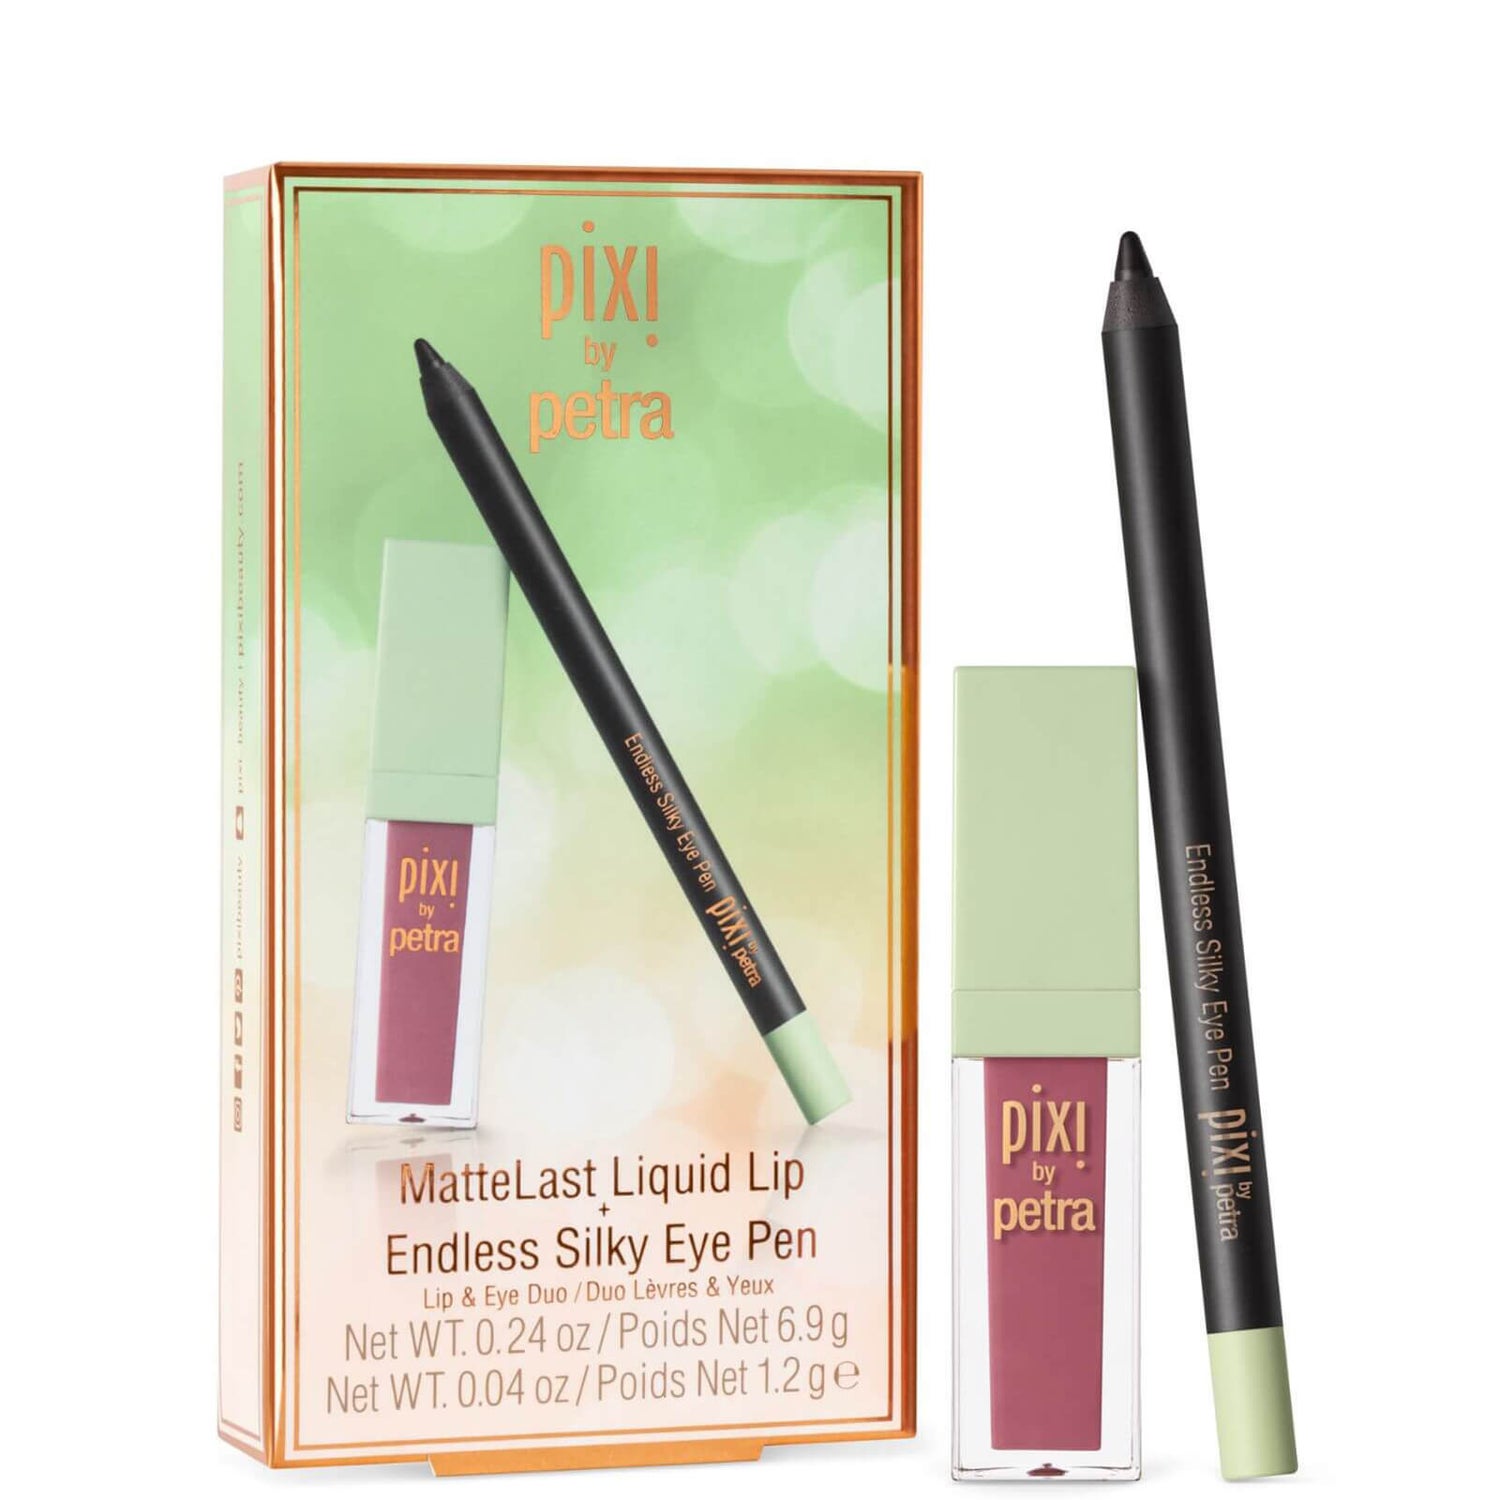 PIXI MatteLast Liquid Lip + Endless Silky Eye Pen (Worth £28.00)